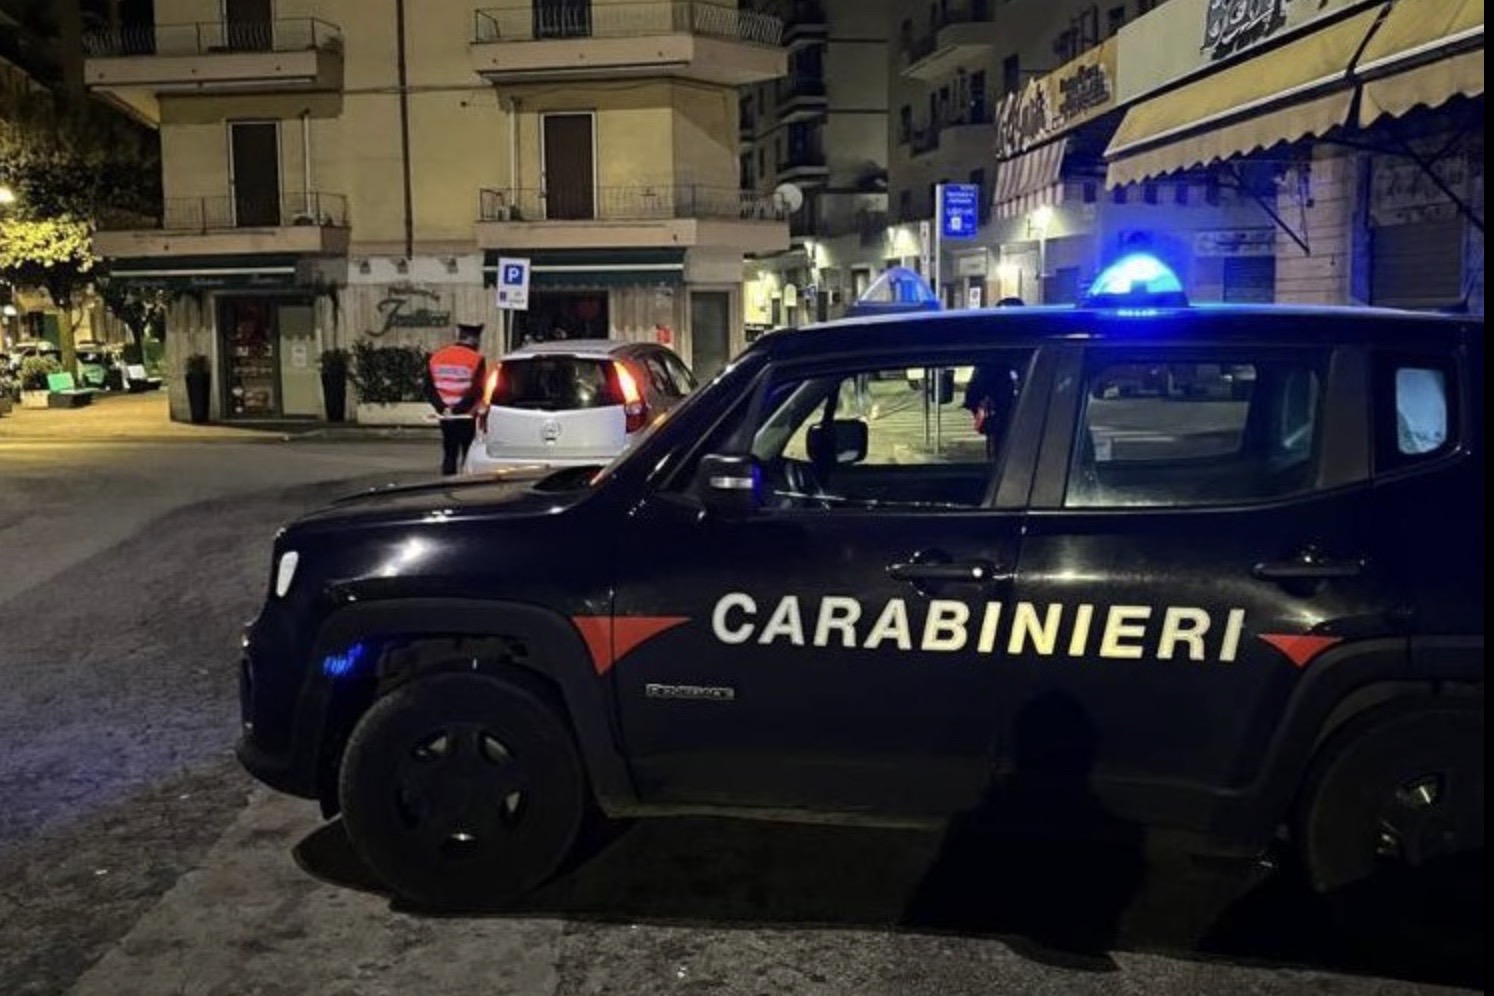 Colleferro: يواصل Carabinieri الفحوصات خلال "Movida"